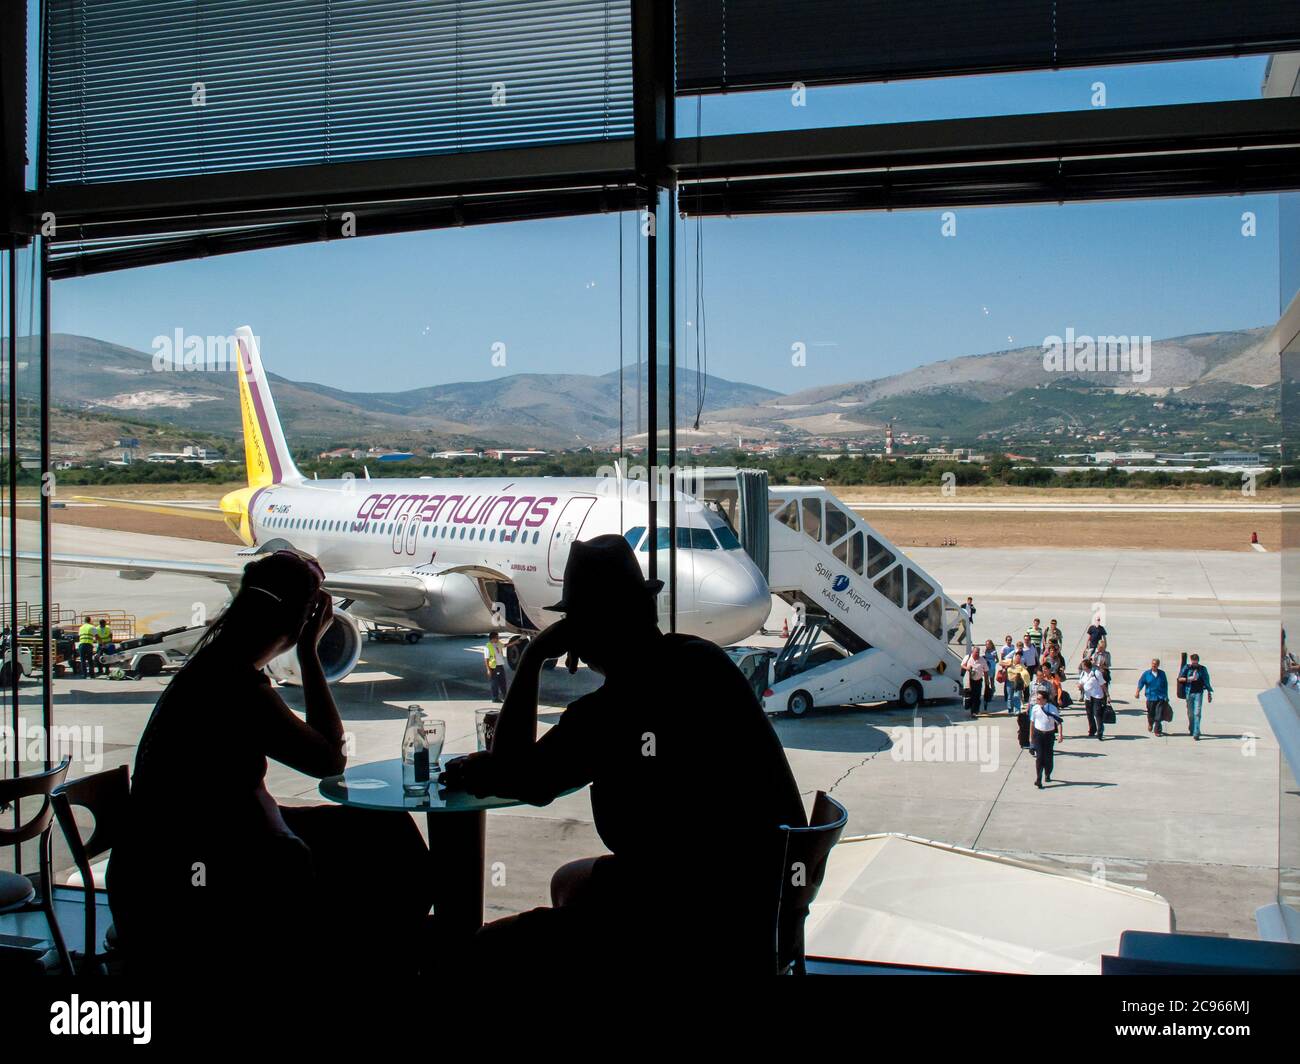 Split, Dalmatia, Croatia - Holidaymakers disembark at Split airport from an aircraft of the German airline germanwings. Stock Photo